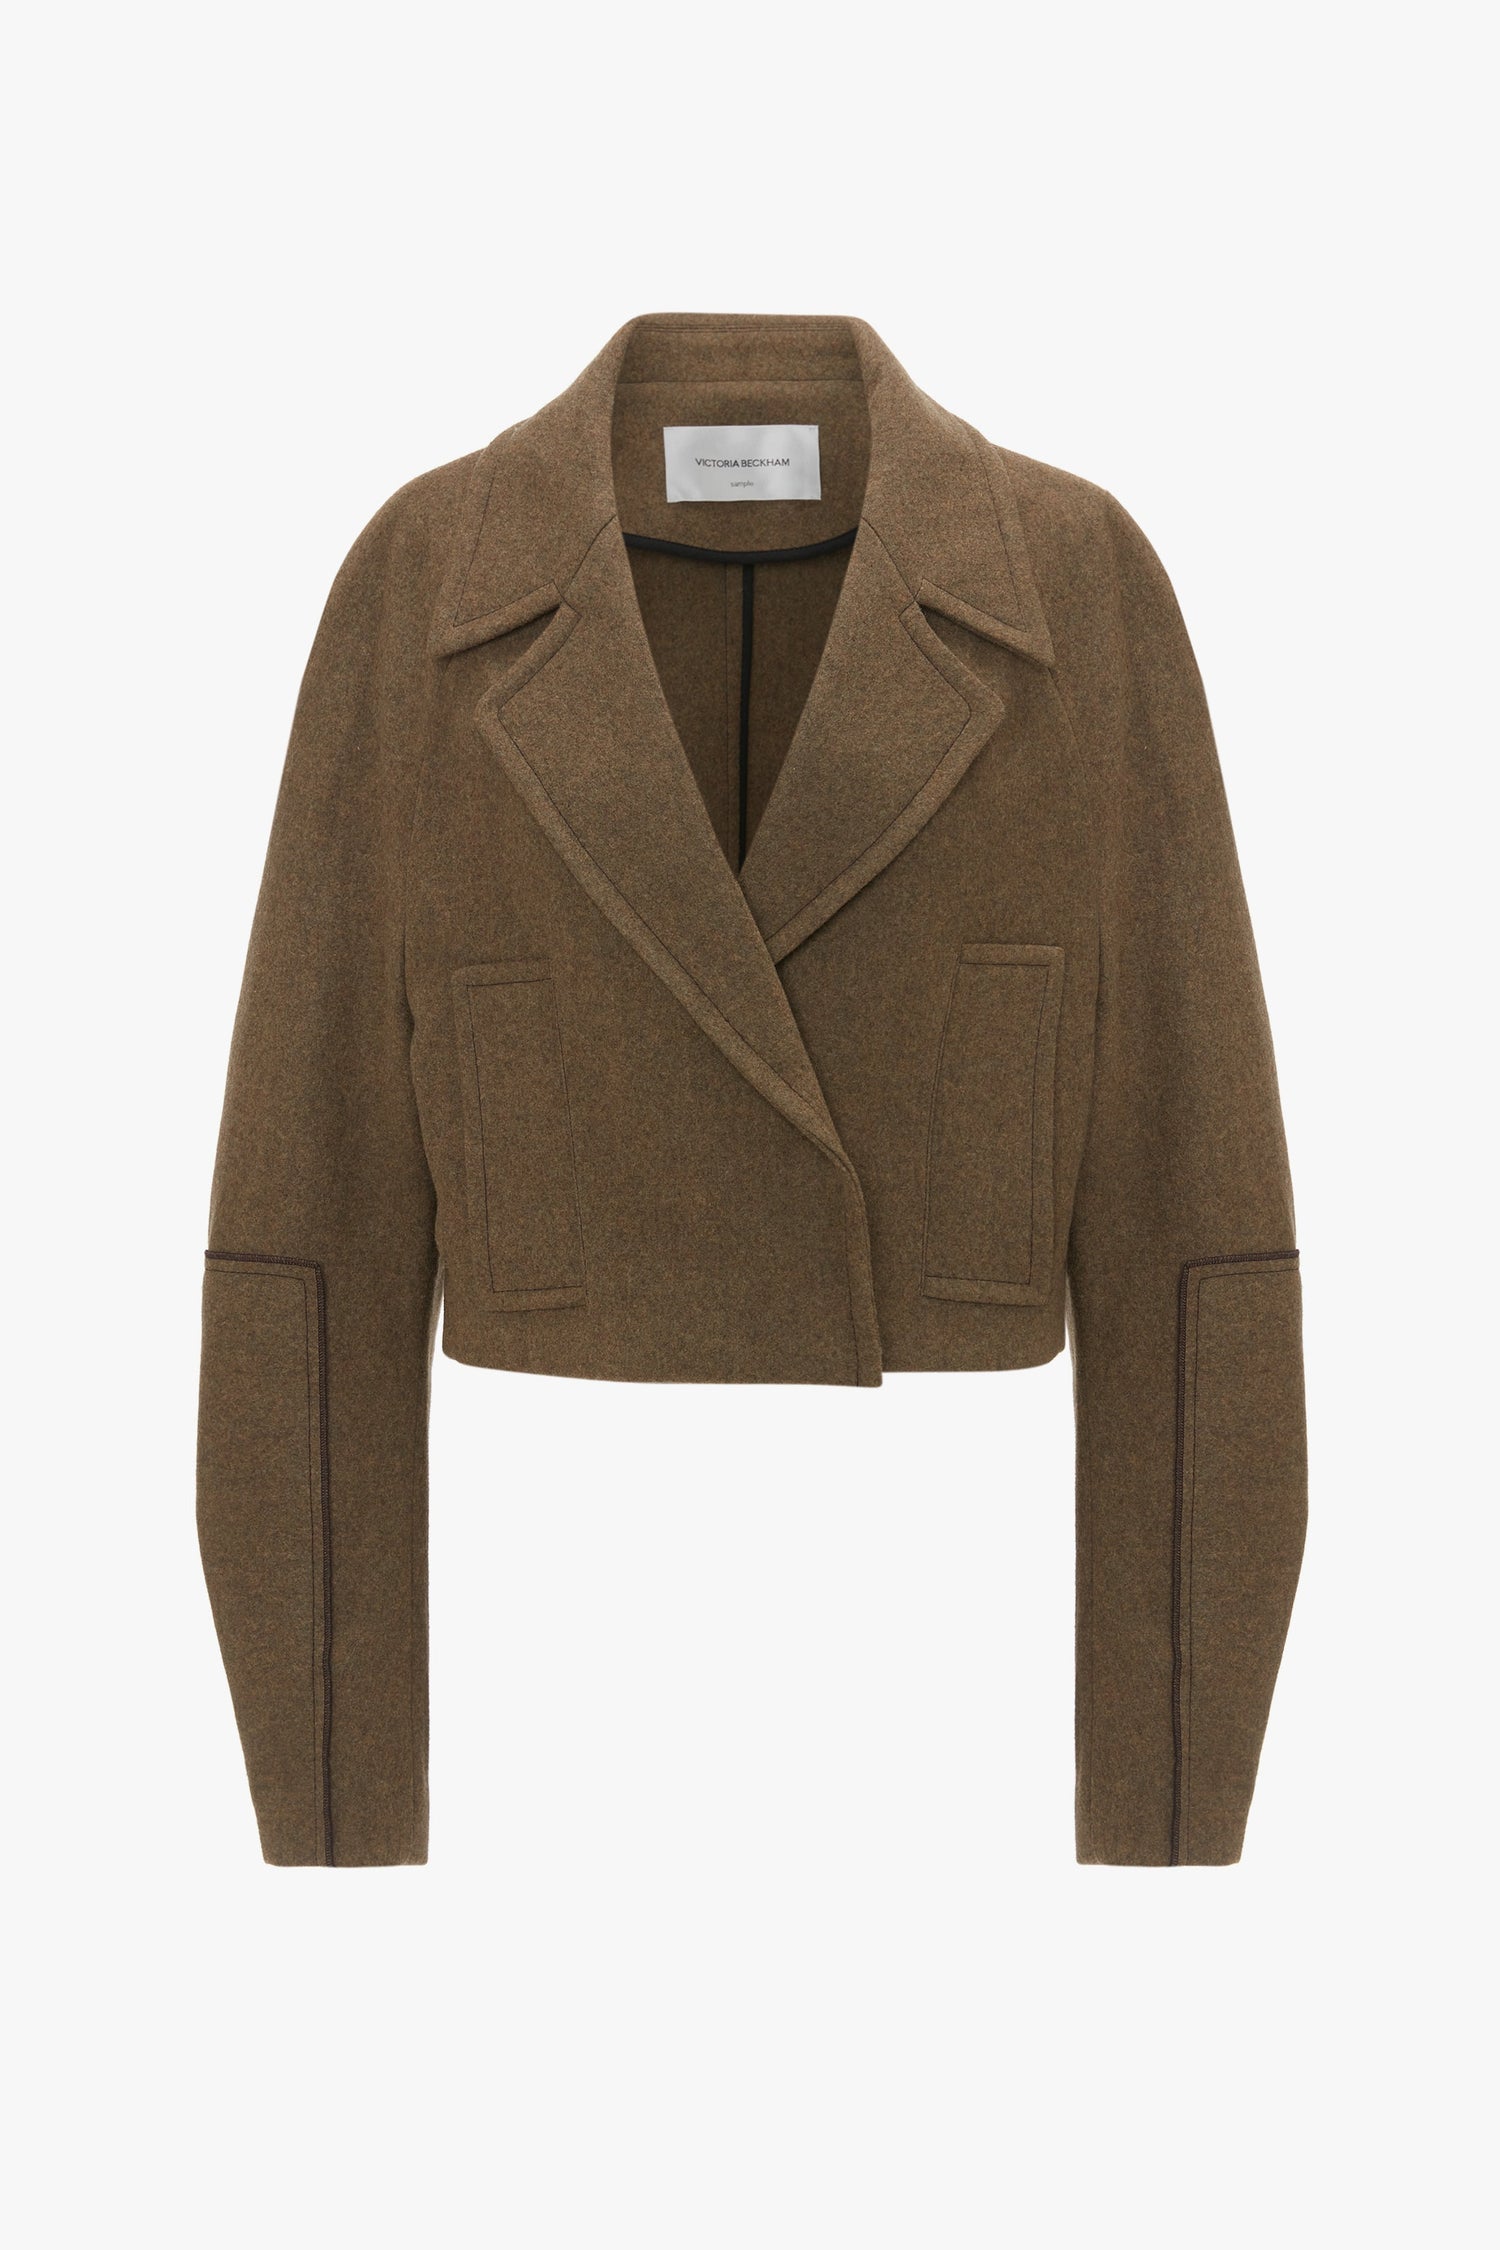 Cropped Pea Coat In Khaki – Victoria Beckham